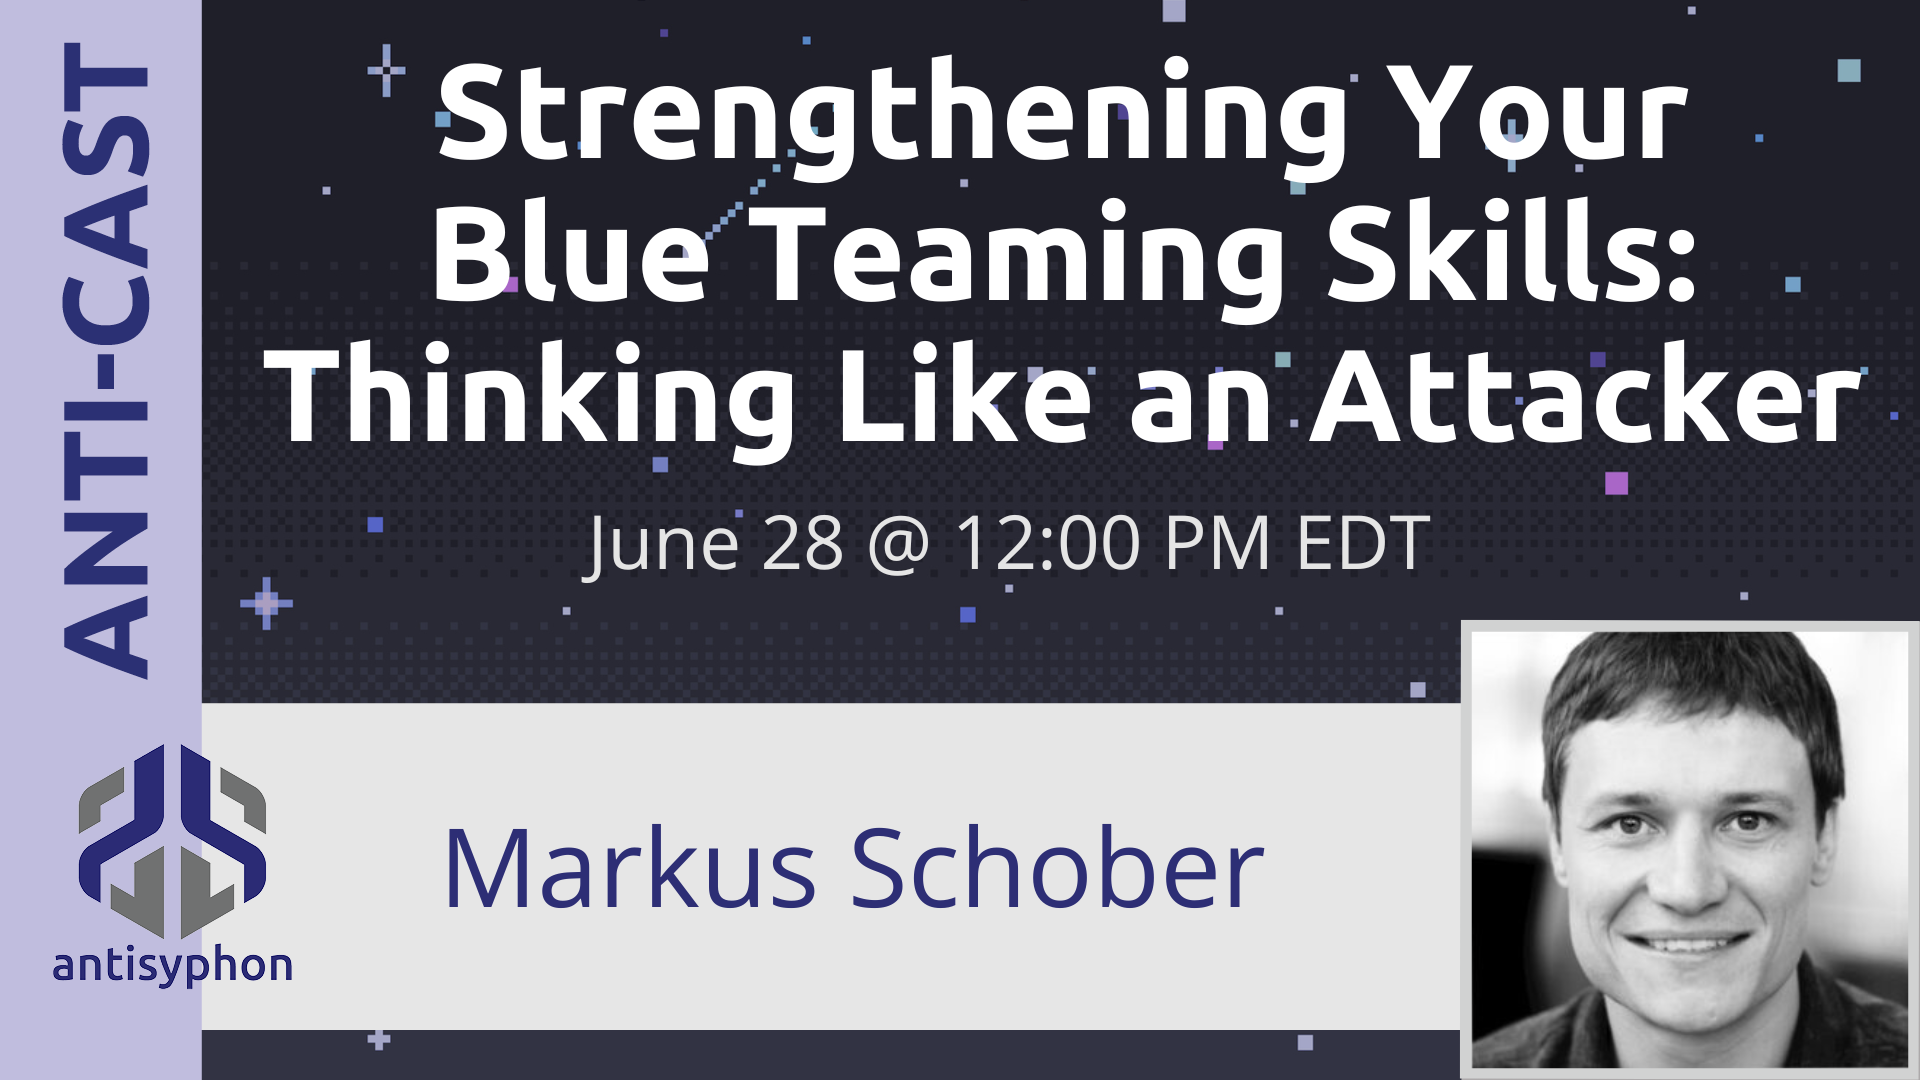 Markus Schober is Here to Strengthen your Blue Team Skills!